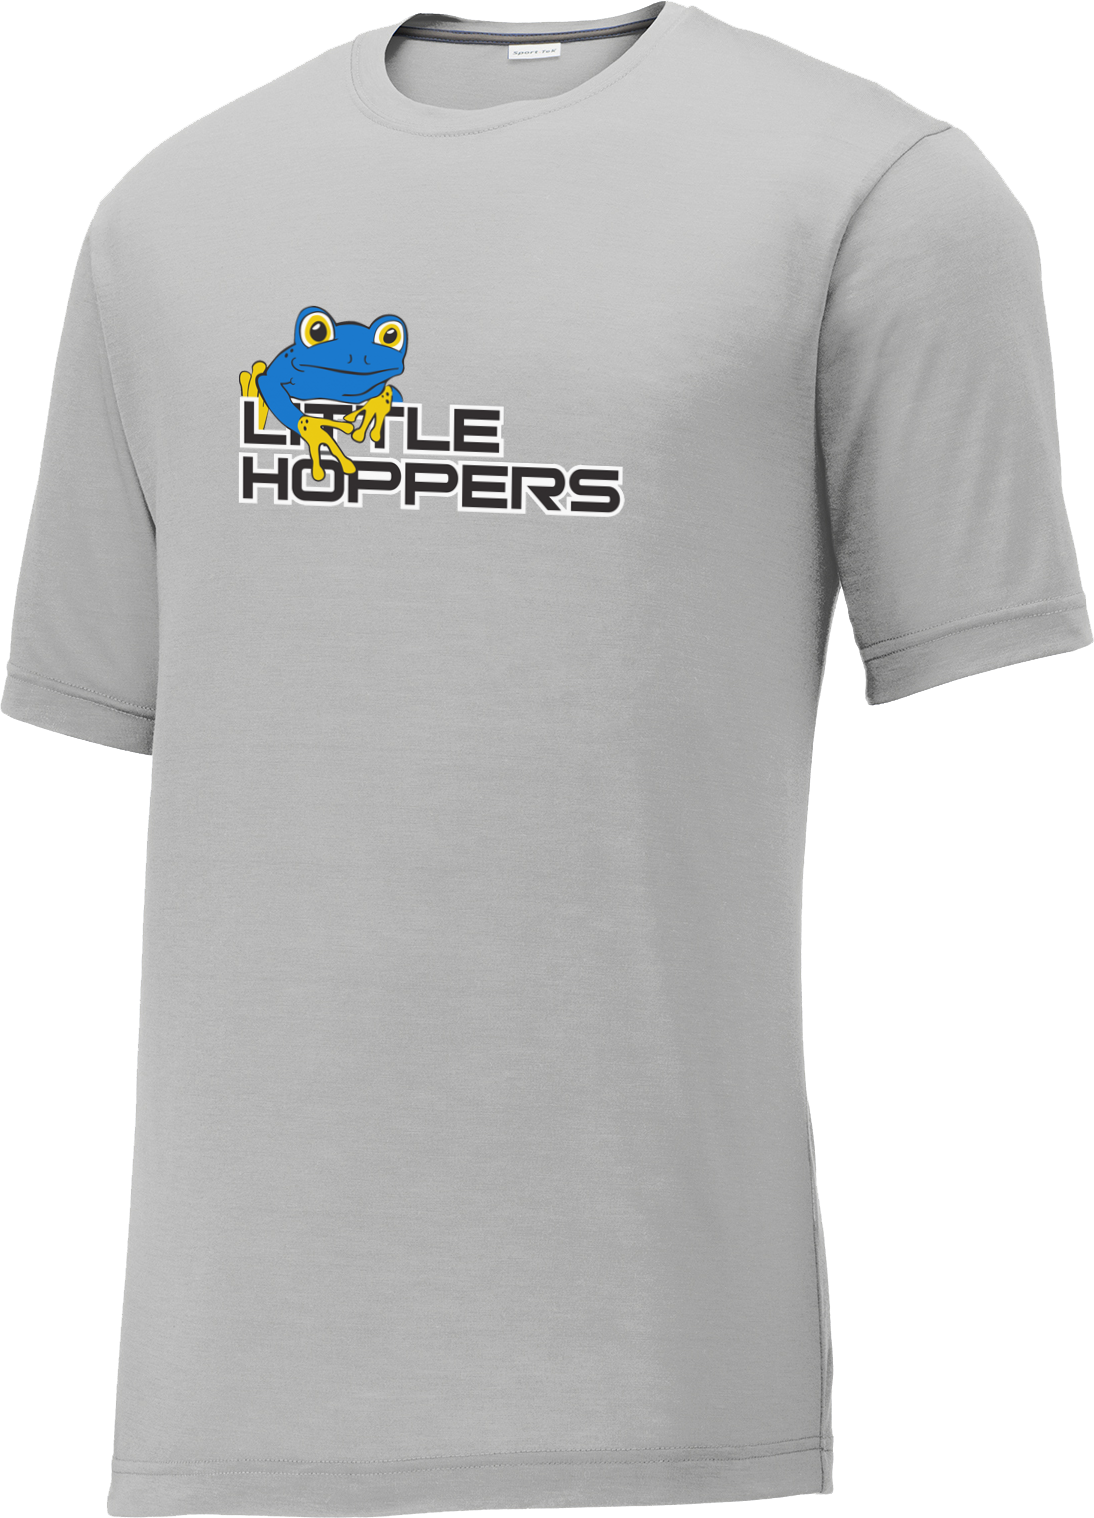 Little Hoppers Silver CottonTouch T-Shirt